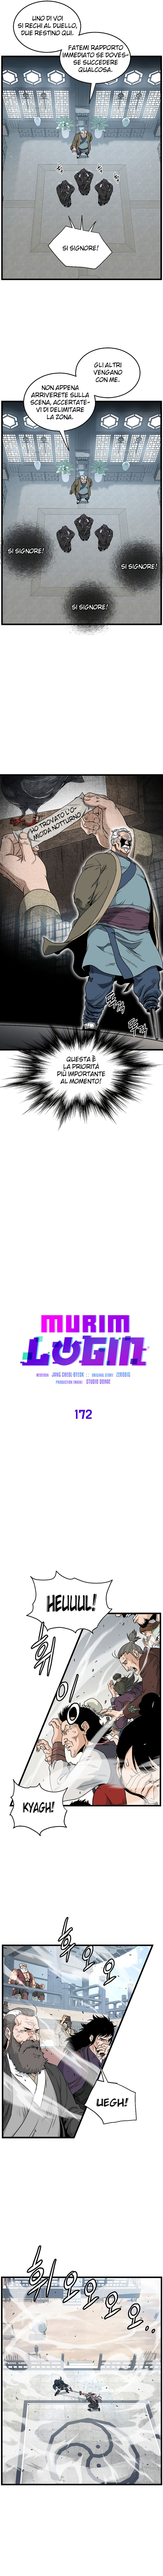 Murim Login - ch 172 Zeurel